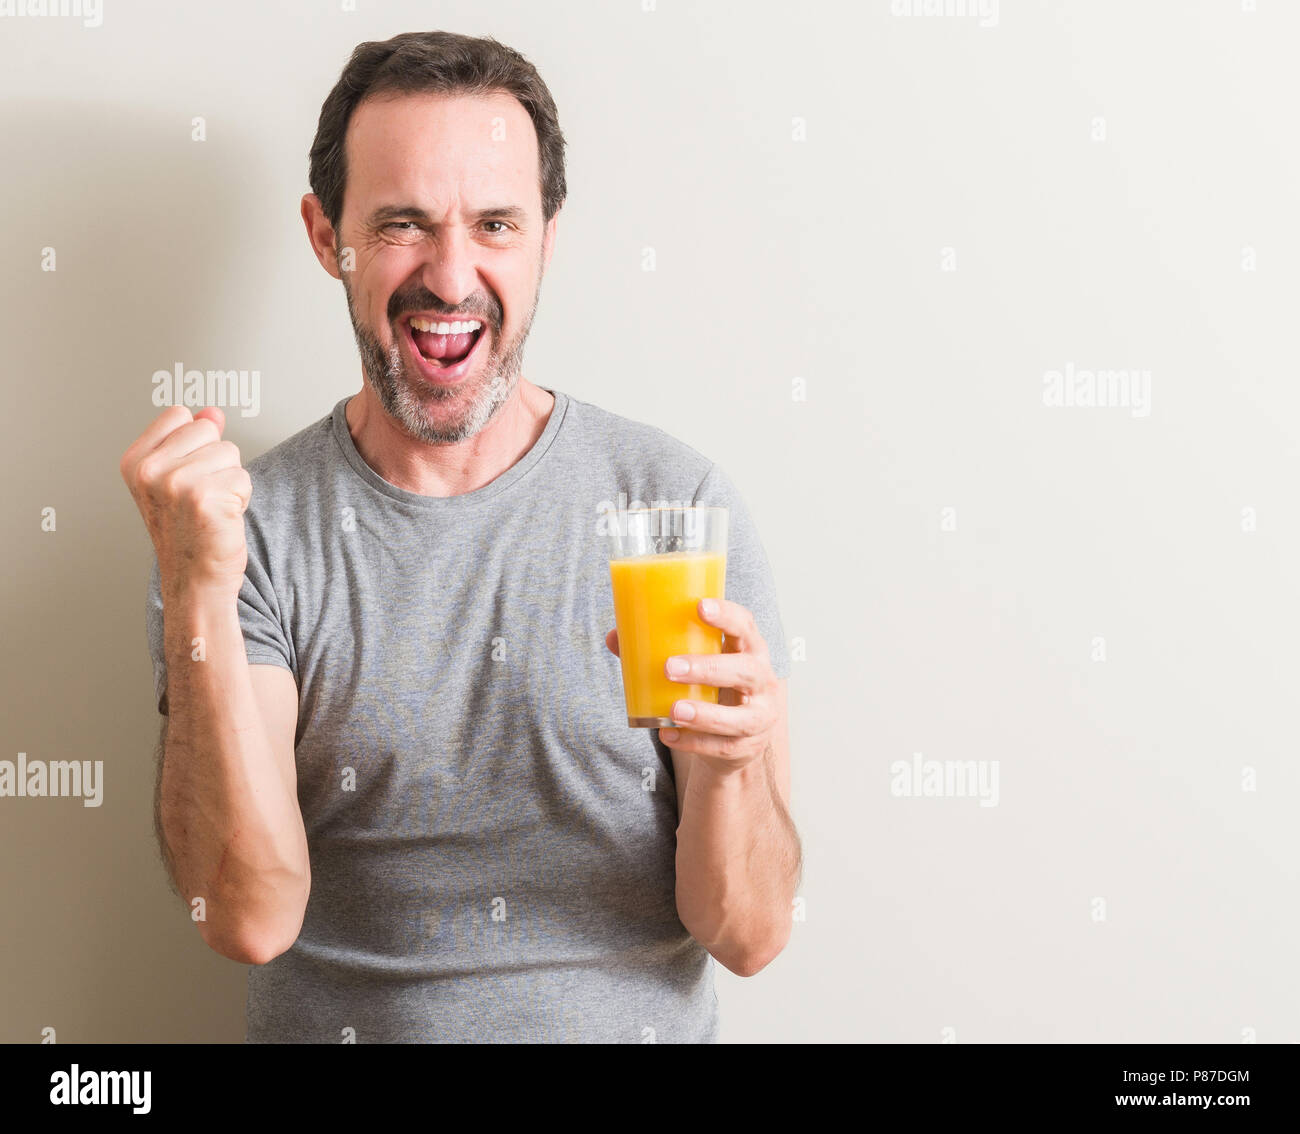 Senior Man Drinking Orange Juice High Resolution Stock Photography And Images Alamy